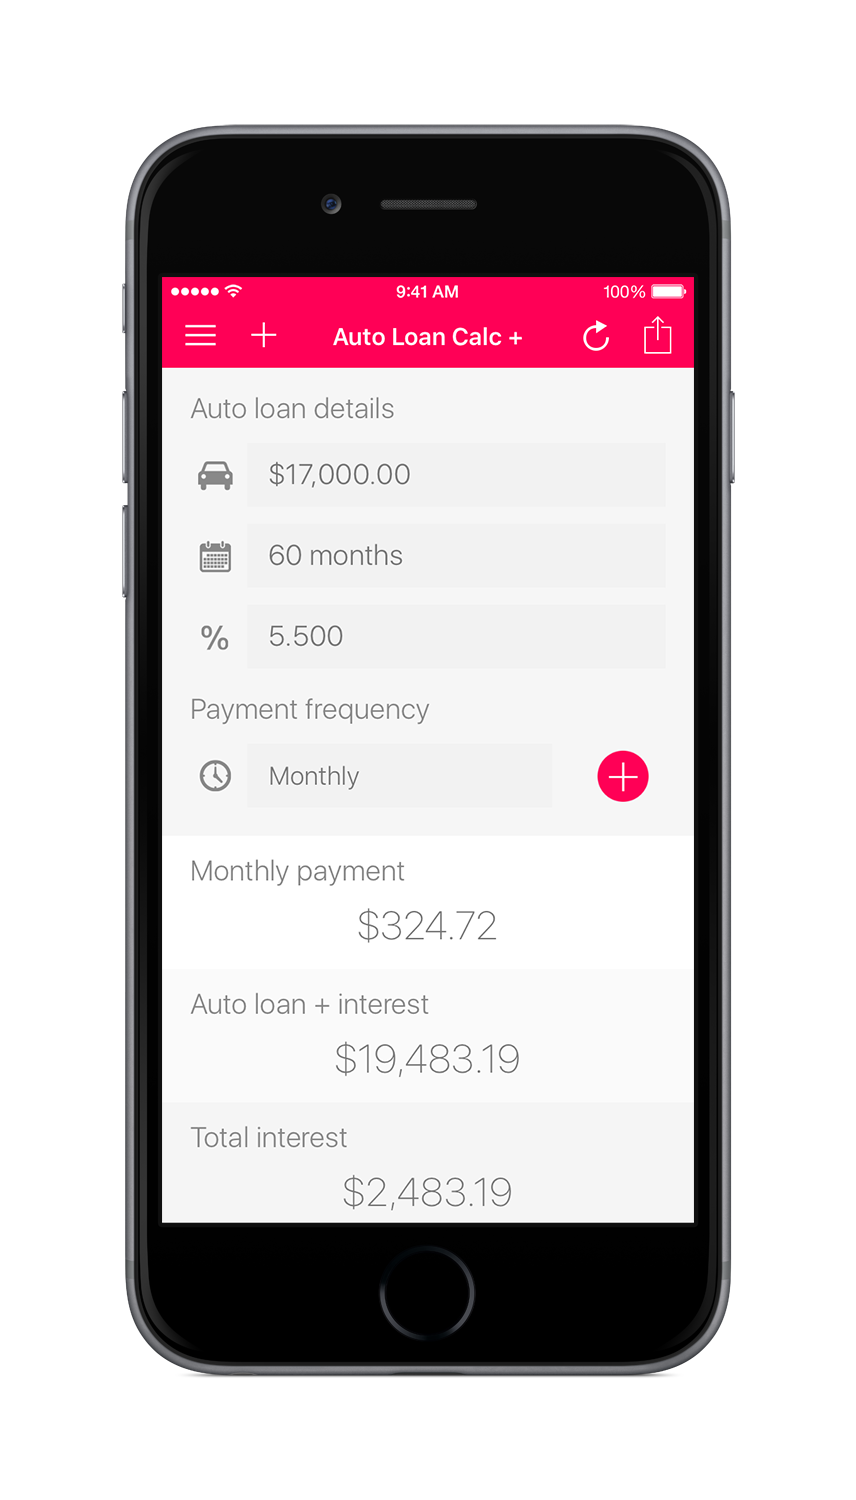 Auto Loan Calculator + for iOS